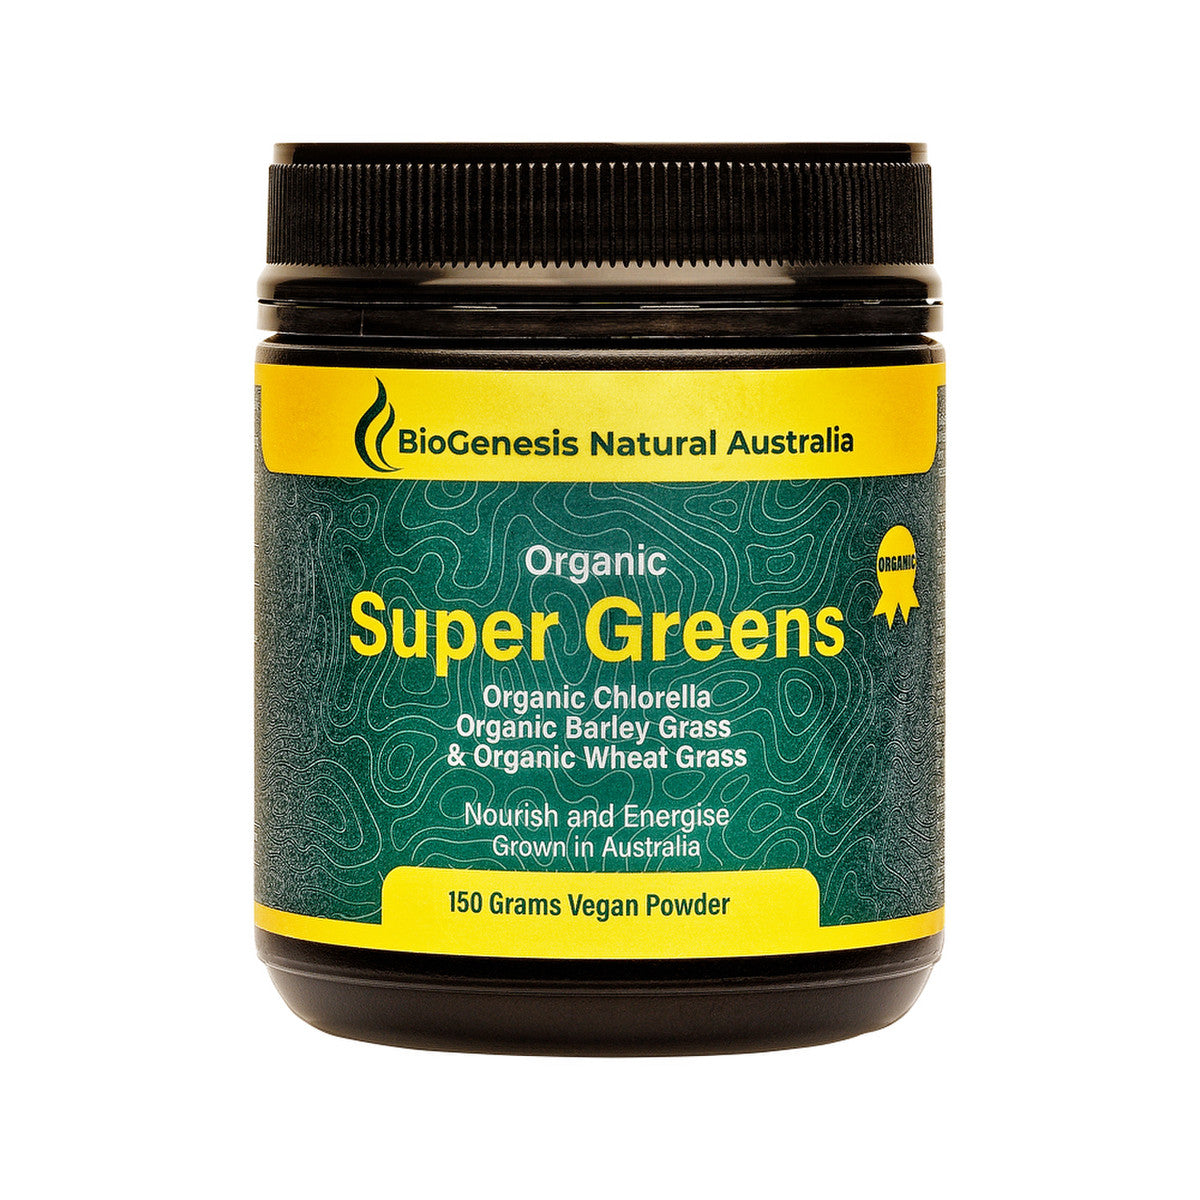 BioGenesis Natural Australia (Travel Friendly) Organic Super Greens Powder